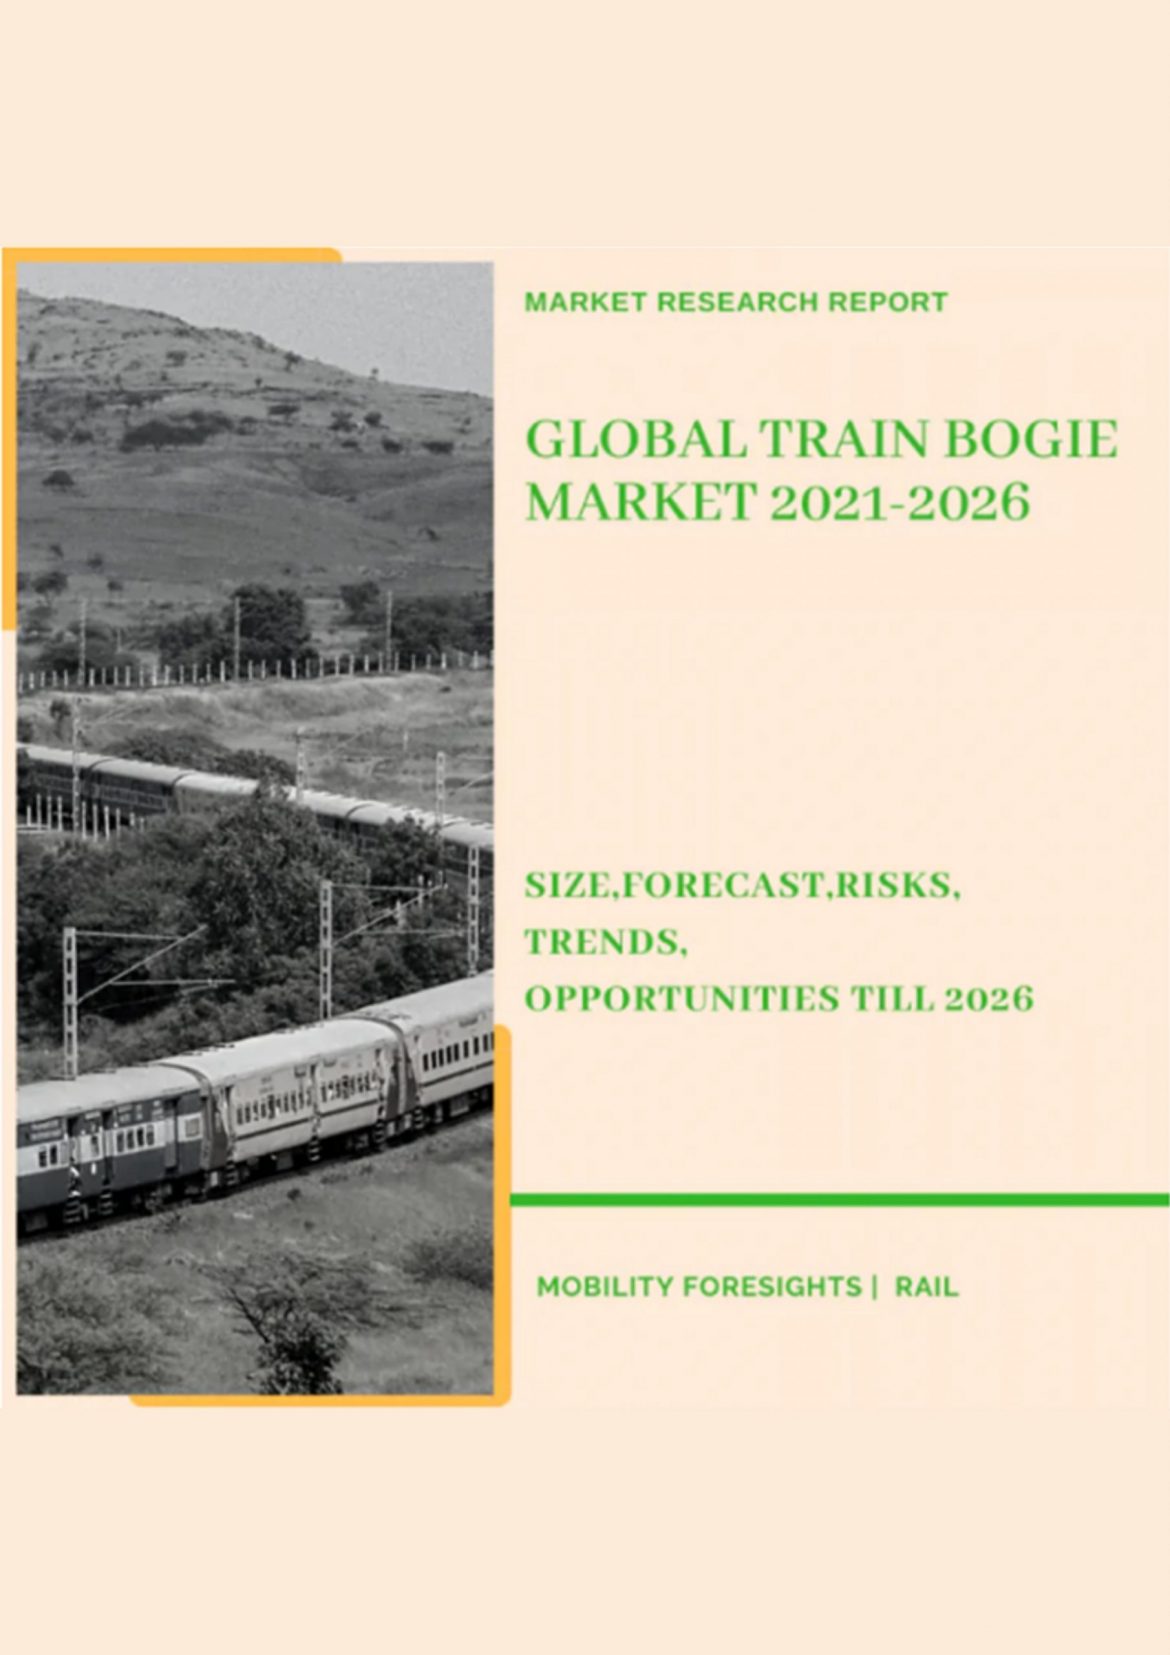 Global Train Bogie Market 2021-2026